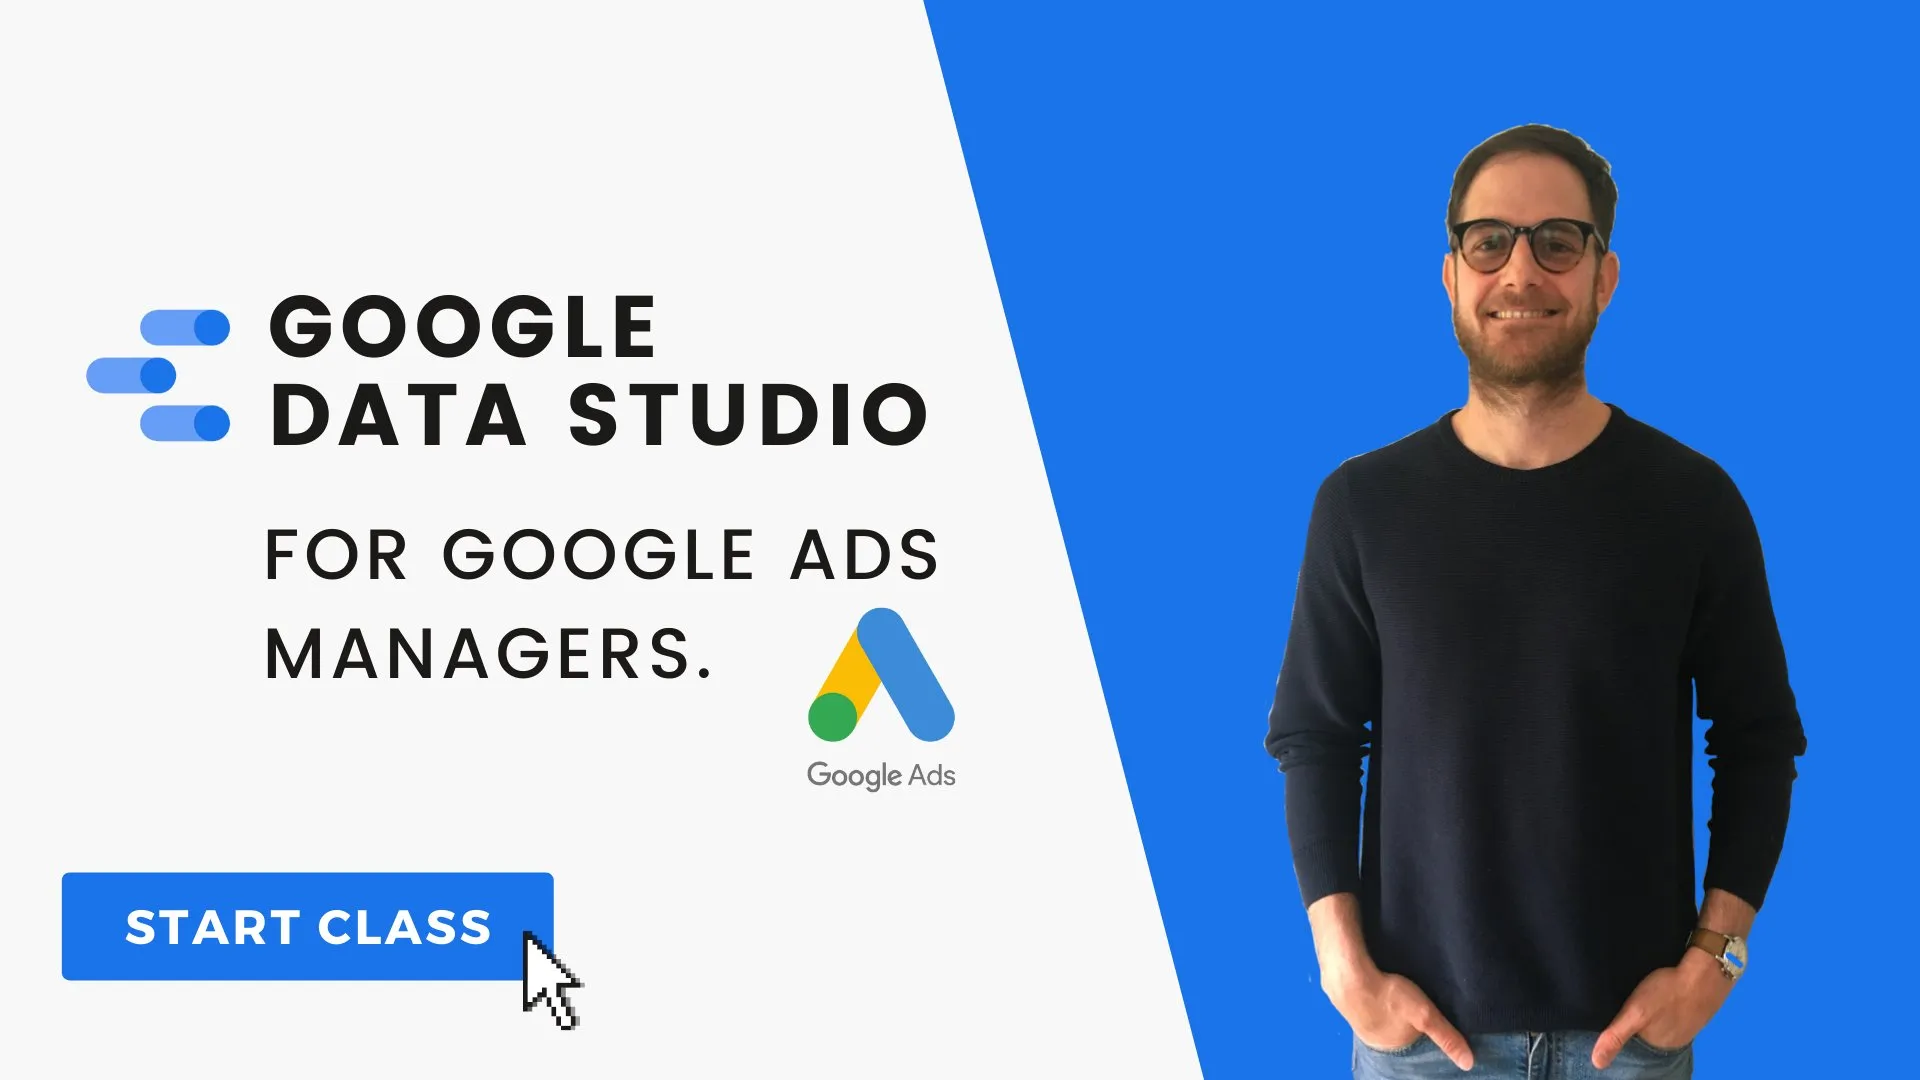 Google Data Studio (Looker Studio) for Google Ads Managers